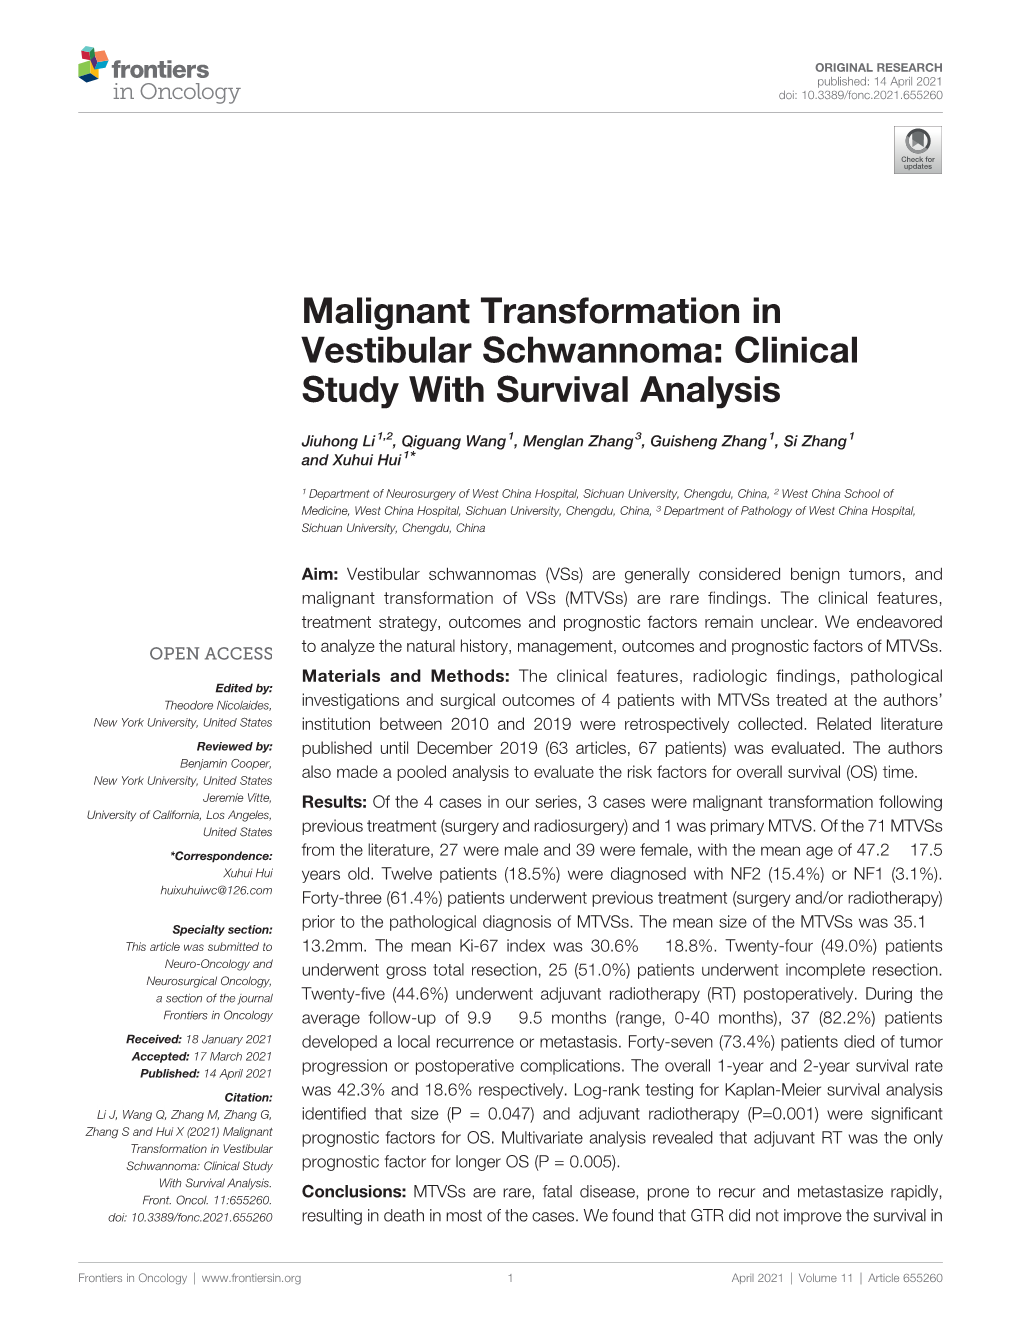 Malignant Transformation in Vestibular Schwannoma: Clinical Study with Survival Analysis